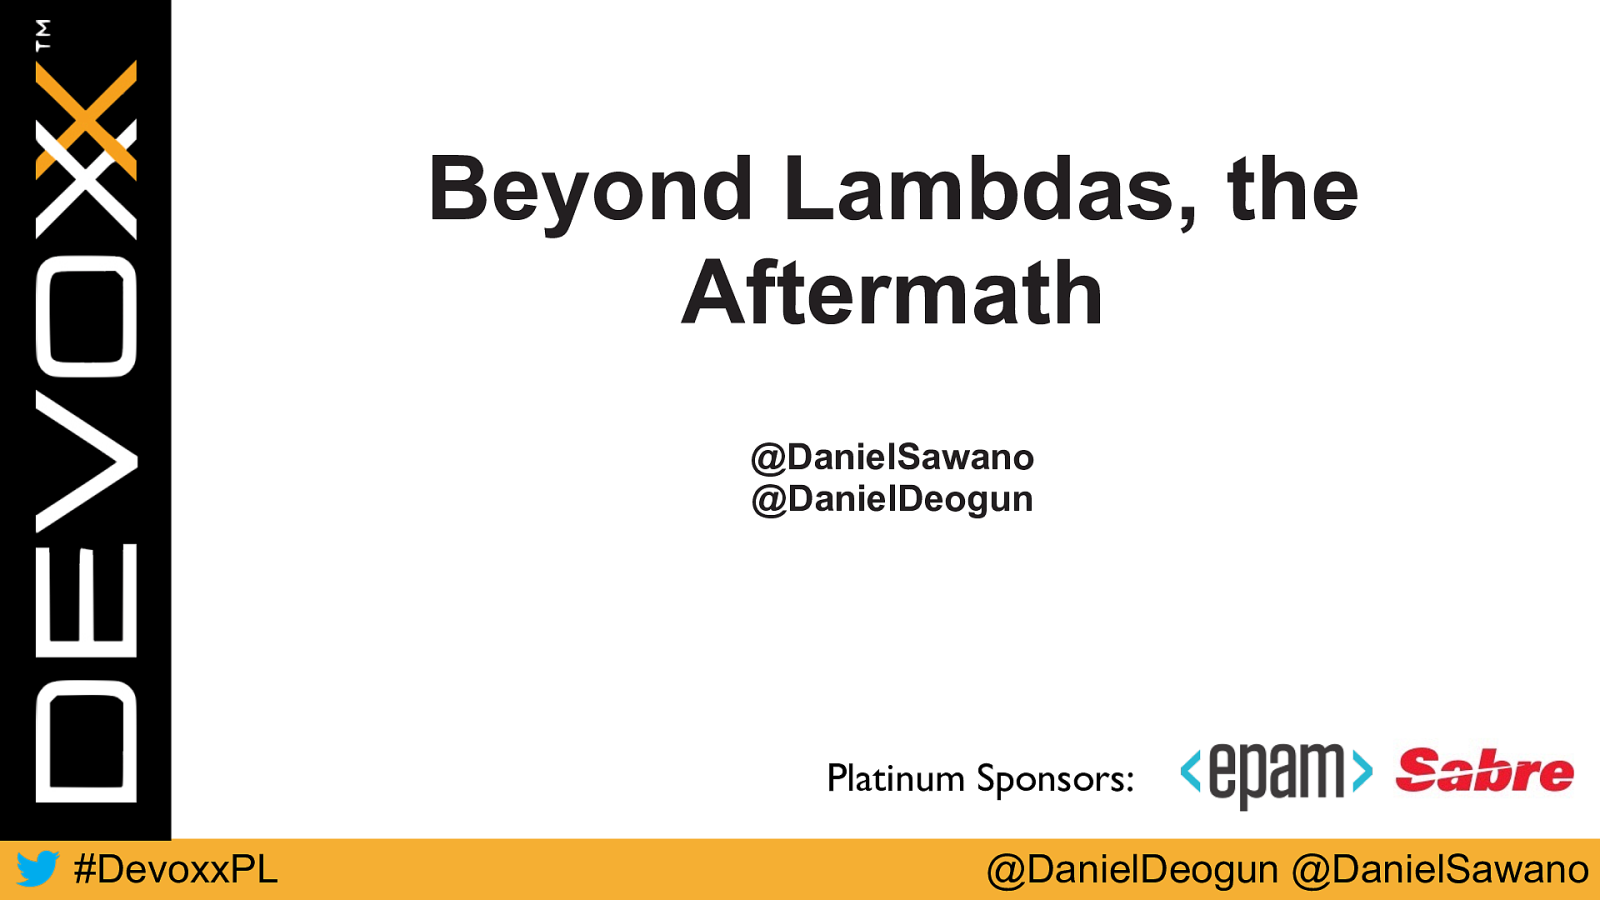 Beyond Lambdas - the Aftermath